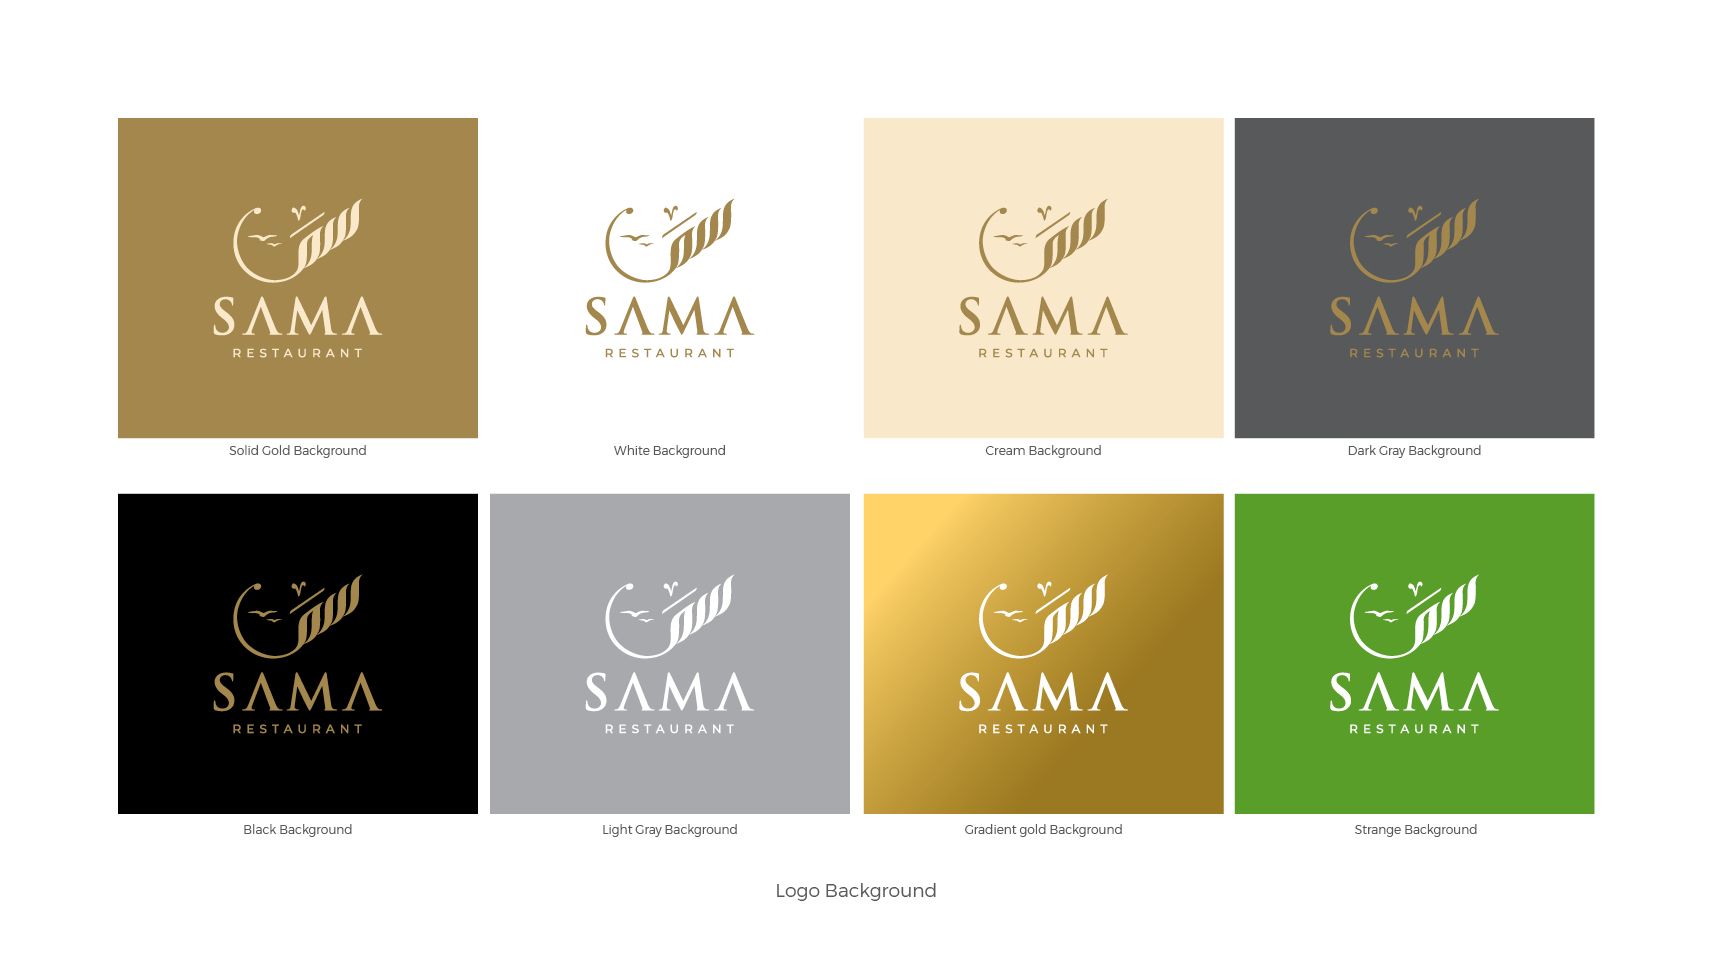 SAMA Brand Guideline15